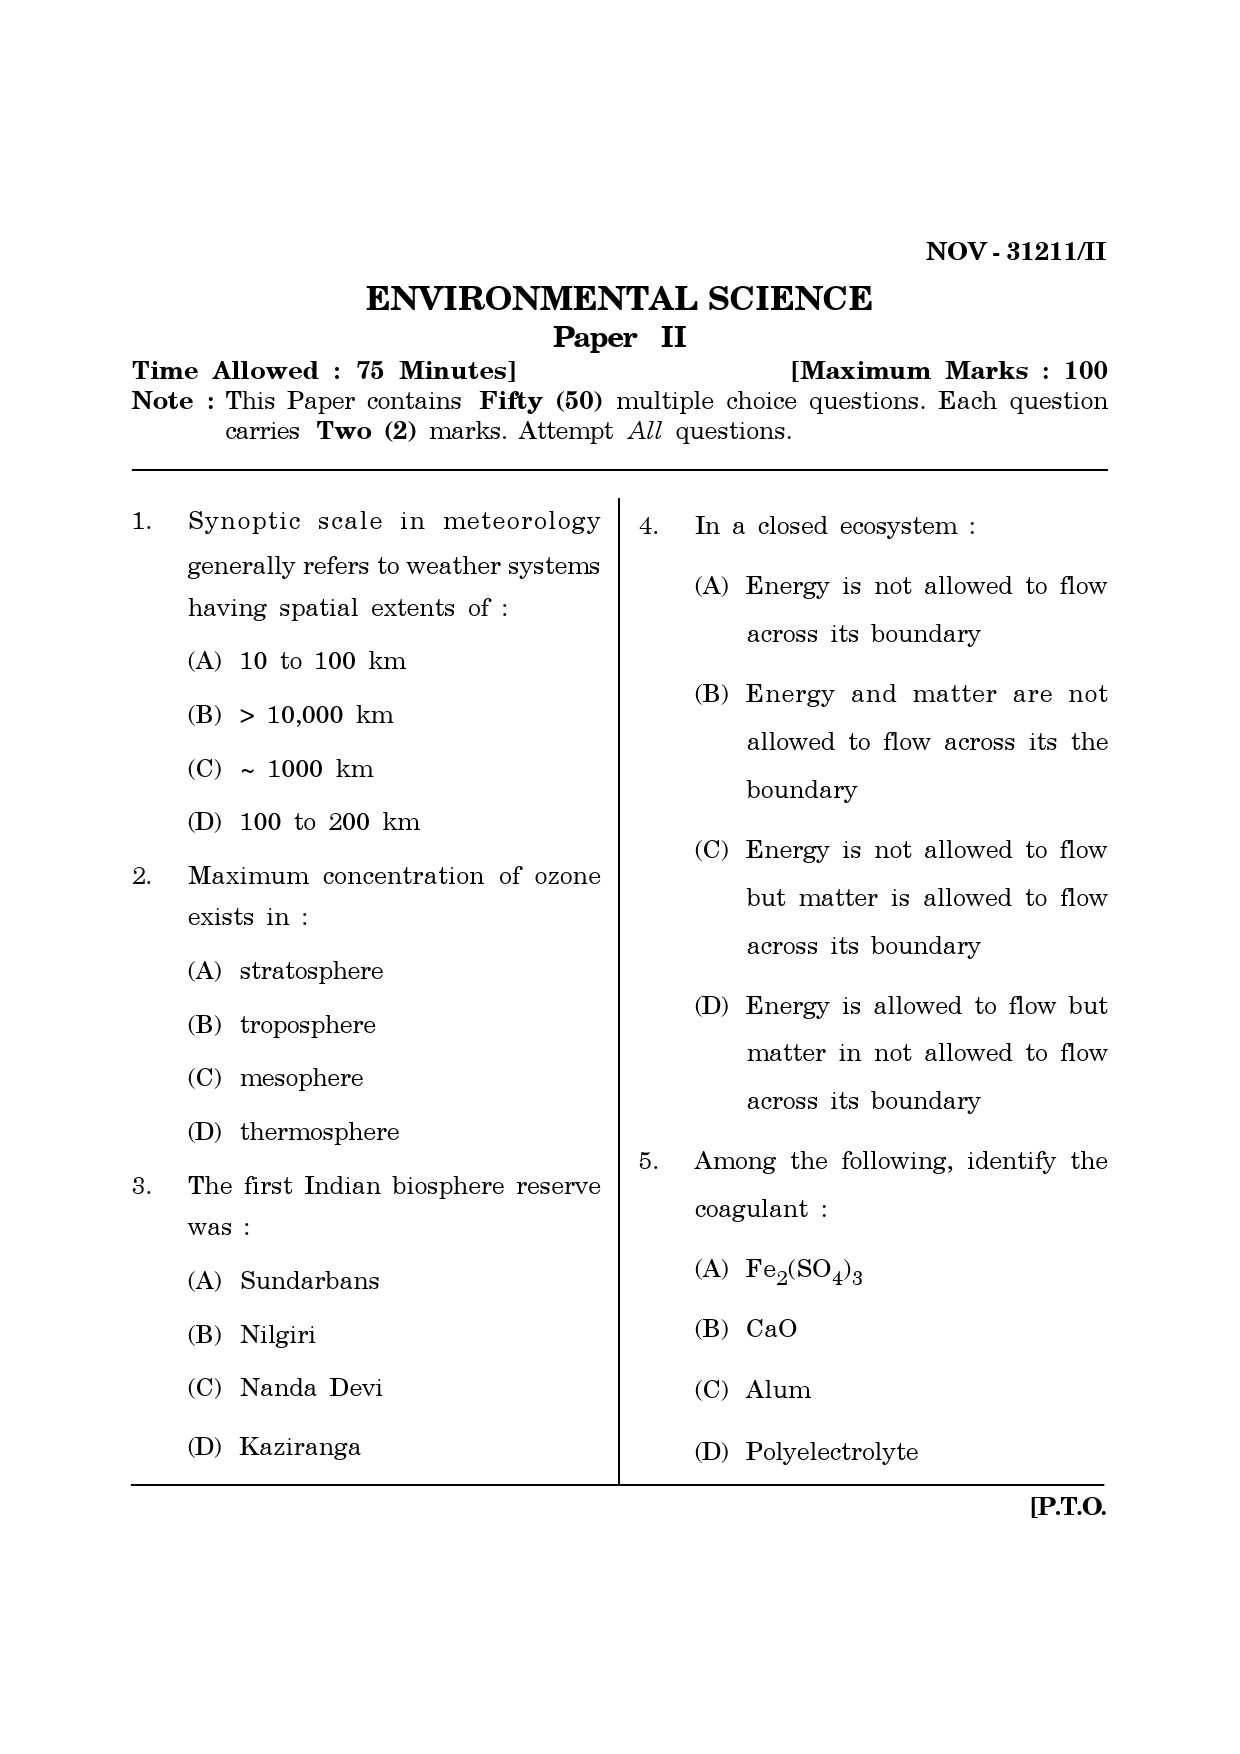 Maharashtra SET Environmental Sciences Question Paper II November 2011 1